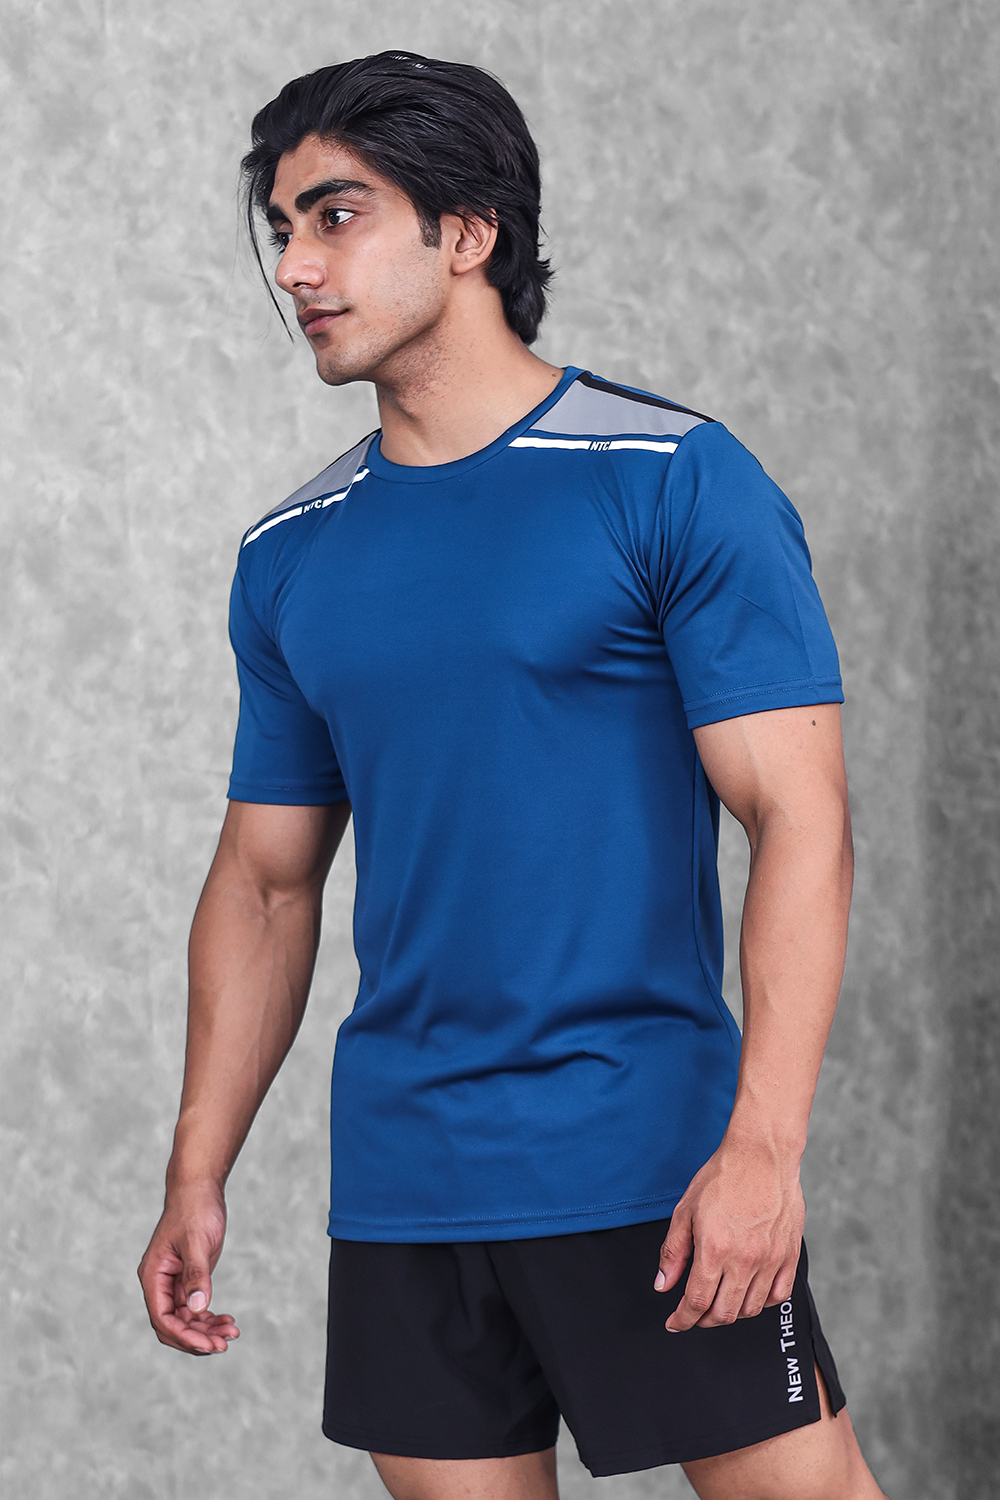 Short Sleeves Side Zipper Panel T-shirt  Best mens t shirts, Mens tshirts,  Mens workout clothes